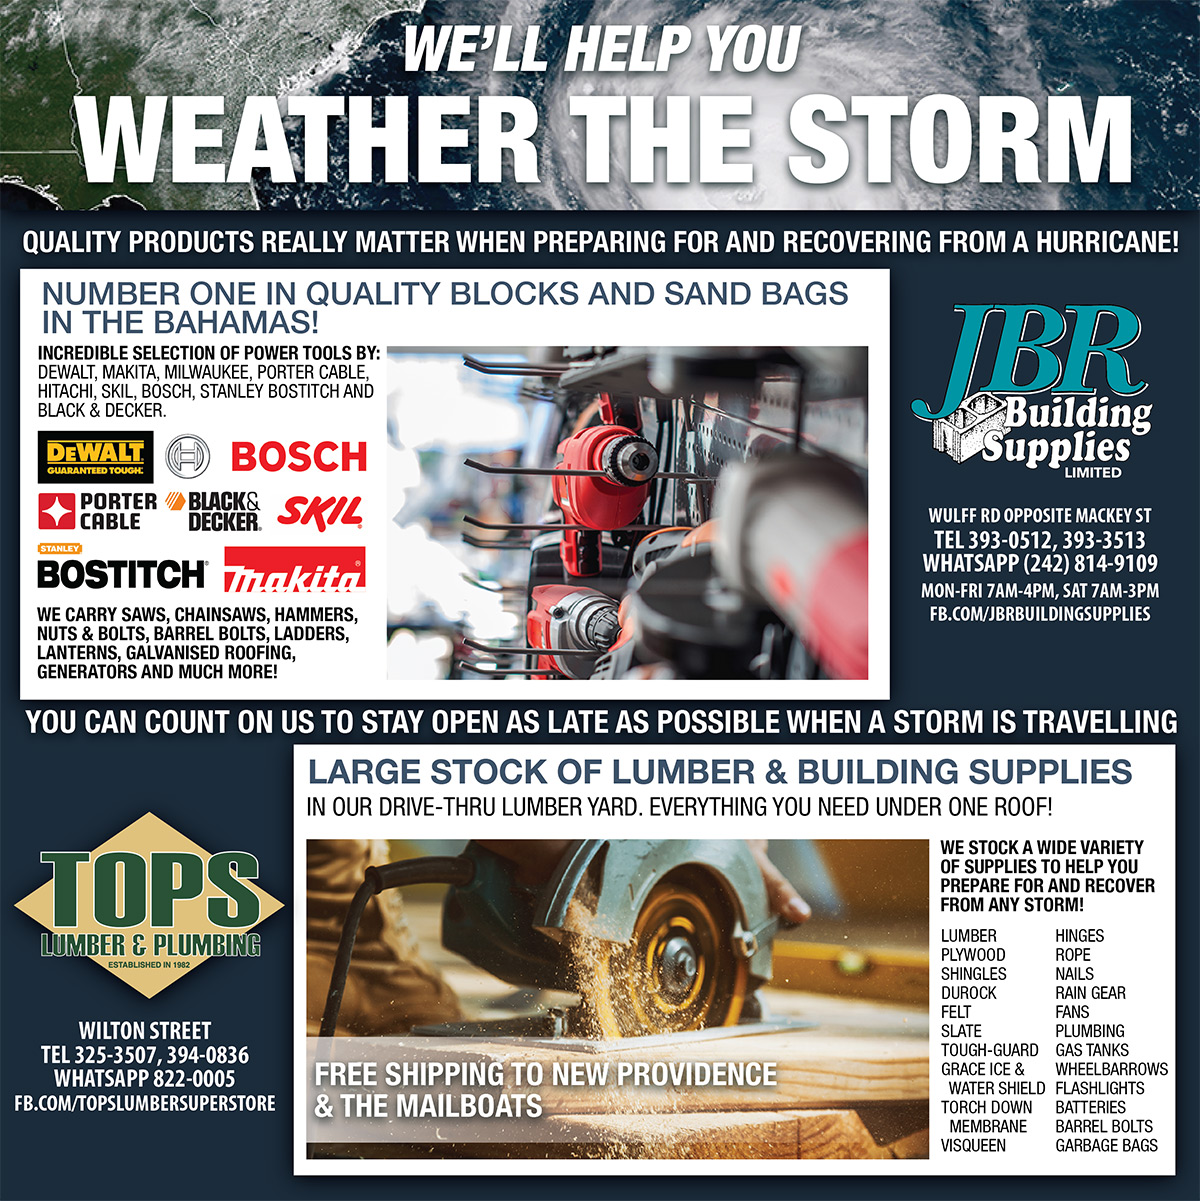 Tops Lumber & Plumbing Supplies - We'll Help You Weather The Storm